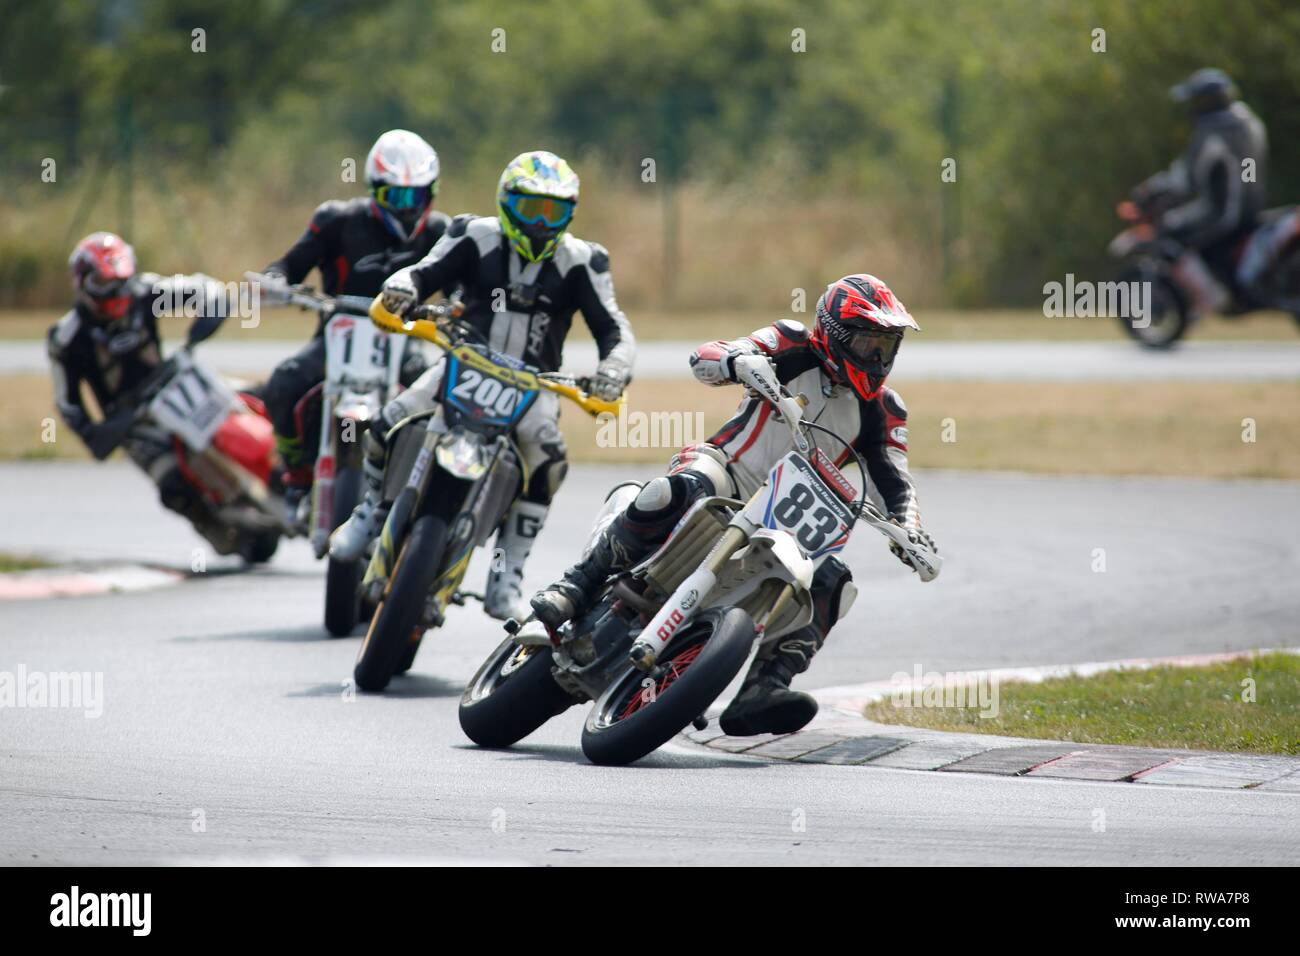 Motorcycle race on track, Czech Republic Stock Photo